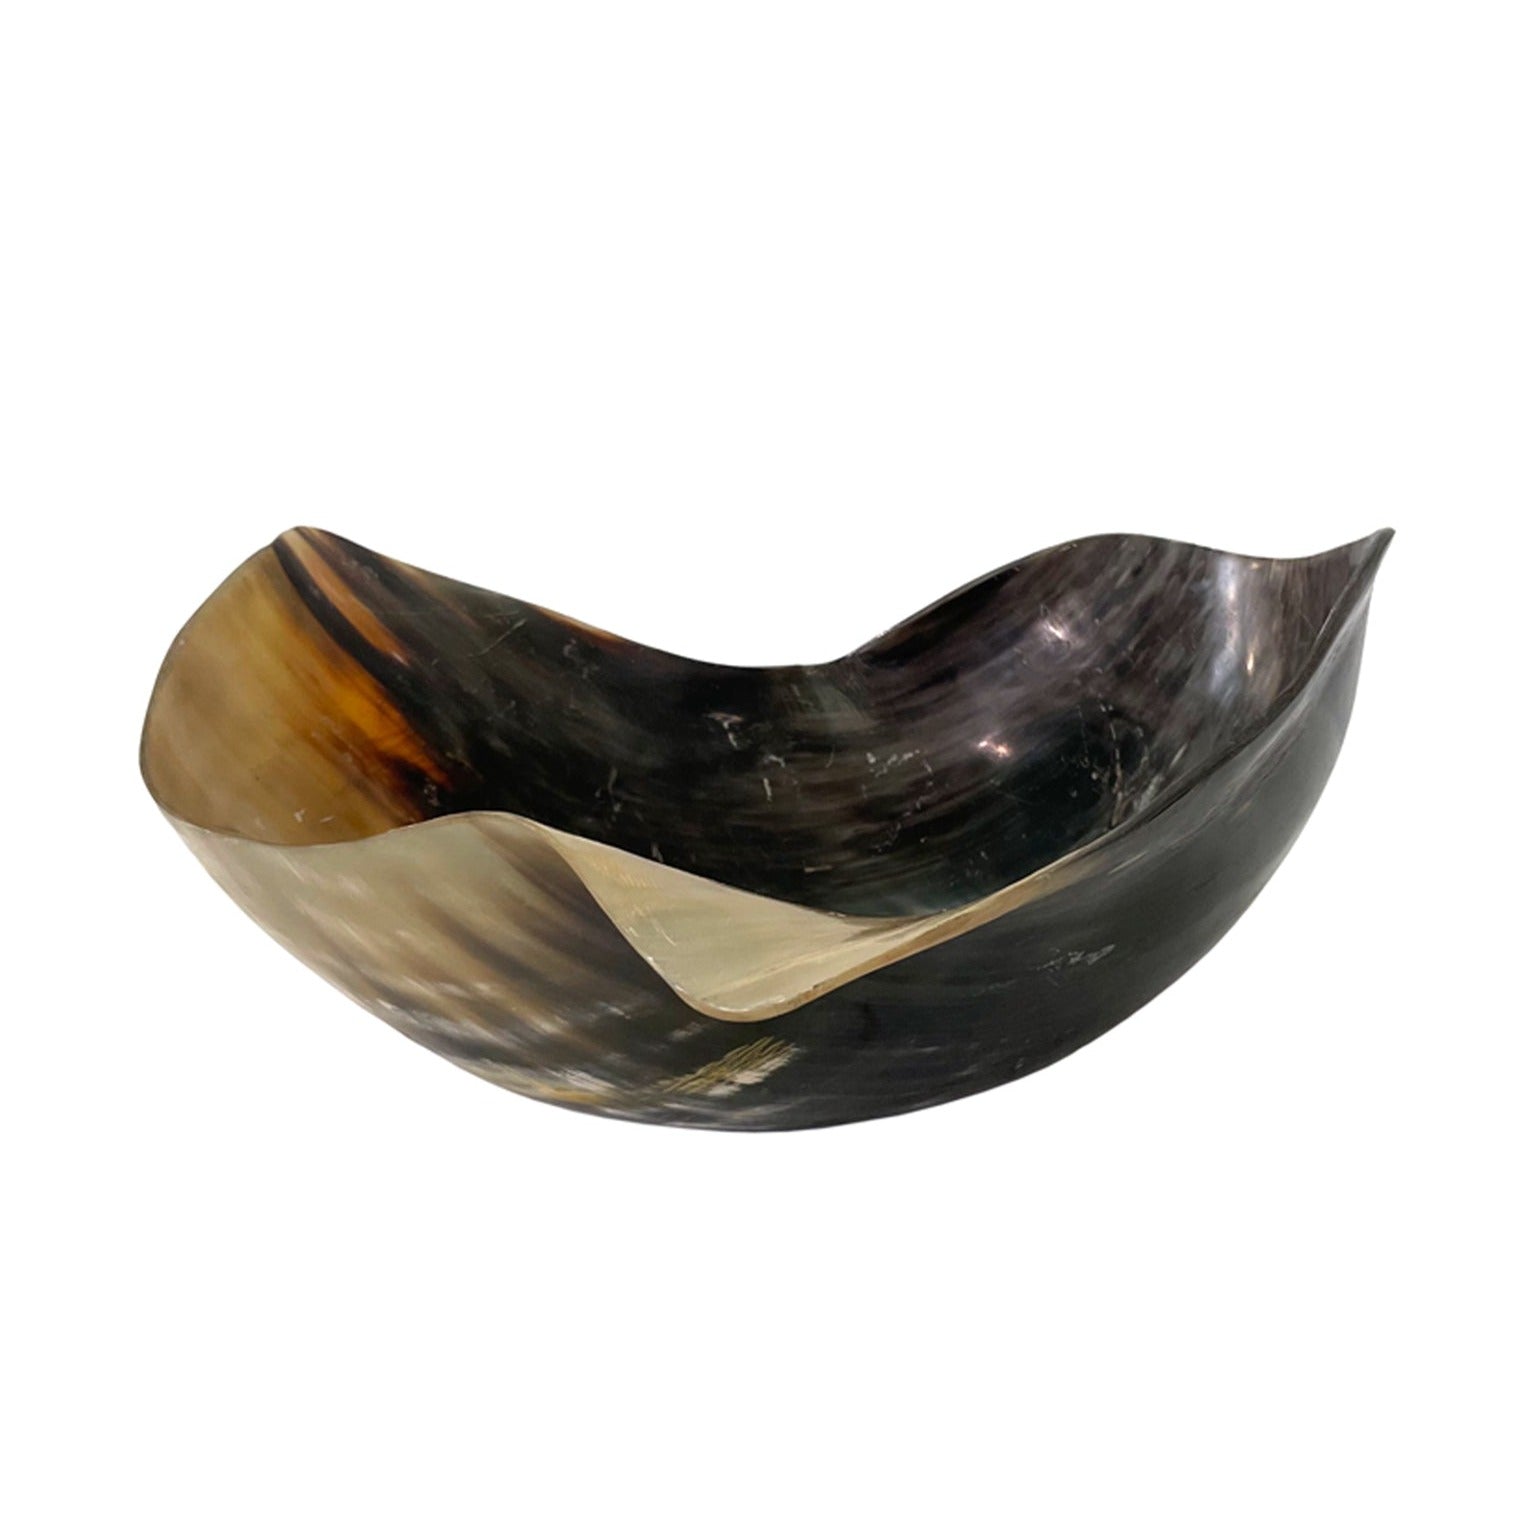 Biomorphic Horn Bowl